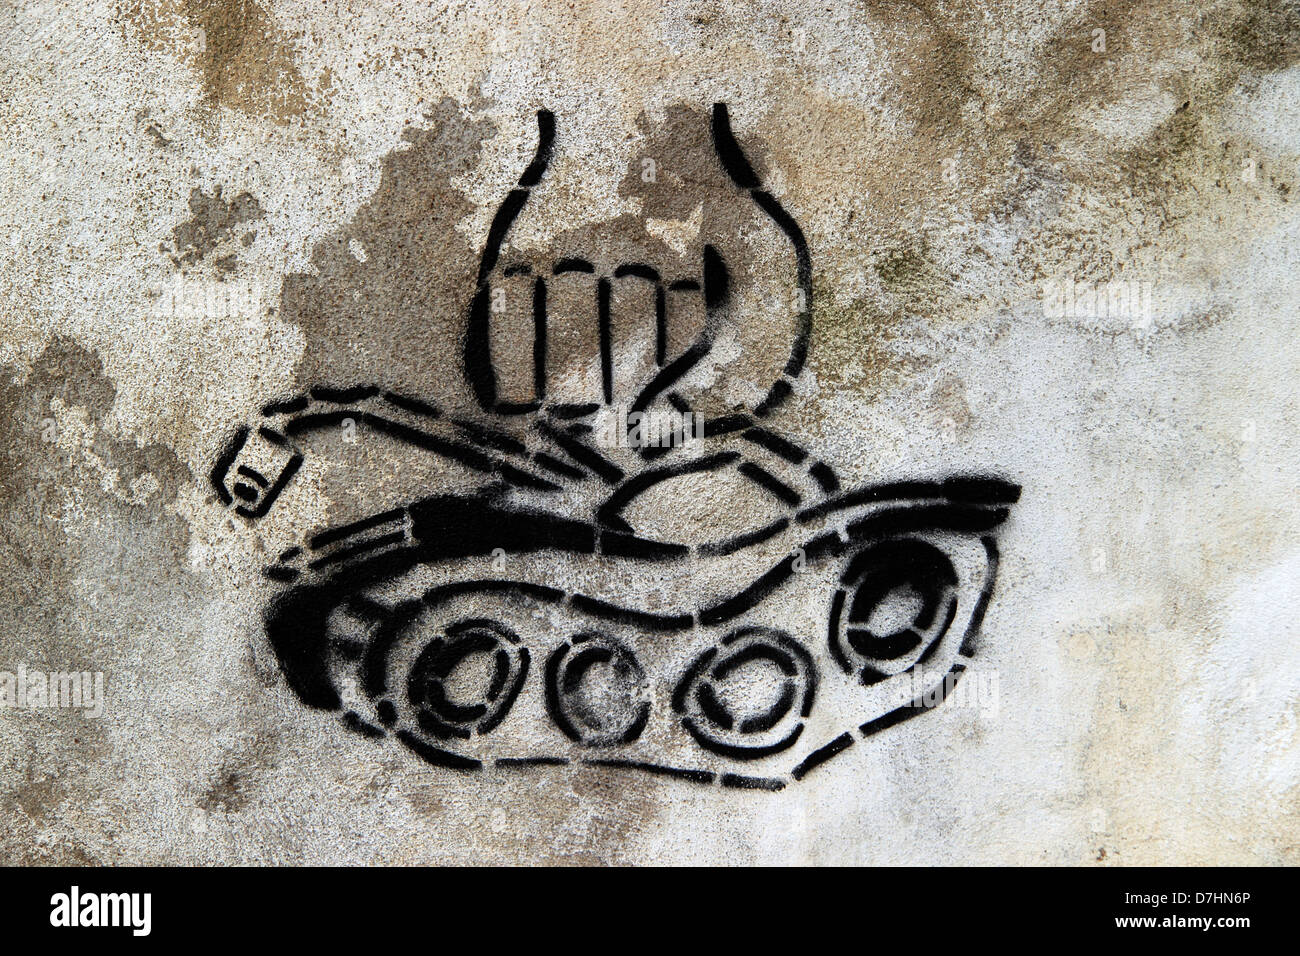 Political graffiti, stencil on a wall of a fist crushing a tank, Lisbon, Portugal Stock Photo